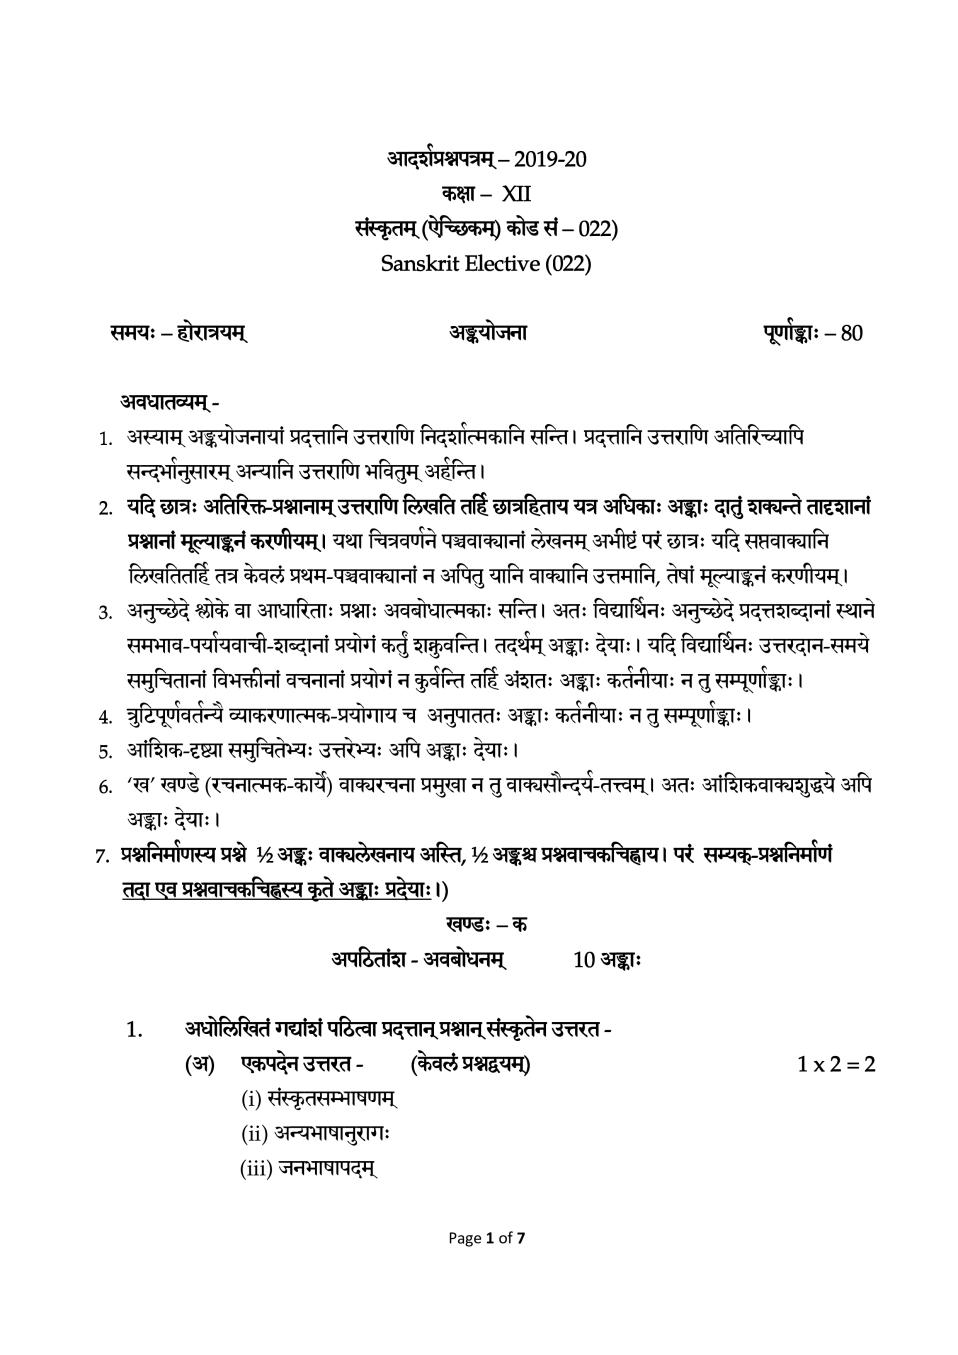 CBSE Class 12 Marking Scheme 2020 for Sanskrit Elective - Page 1